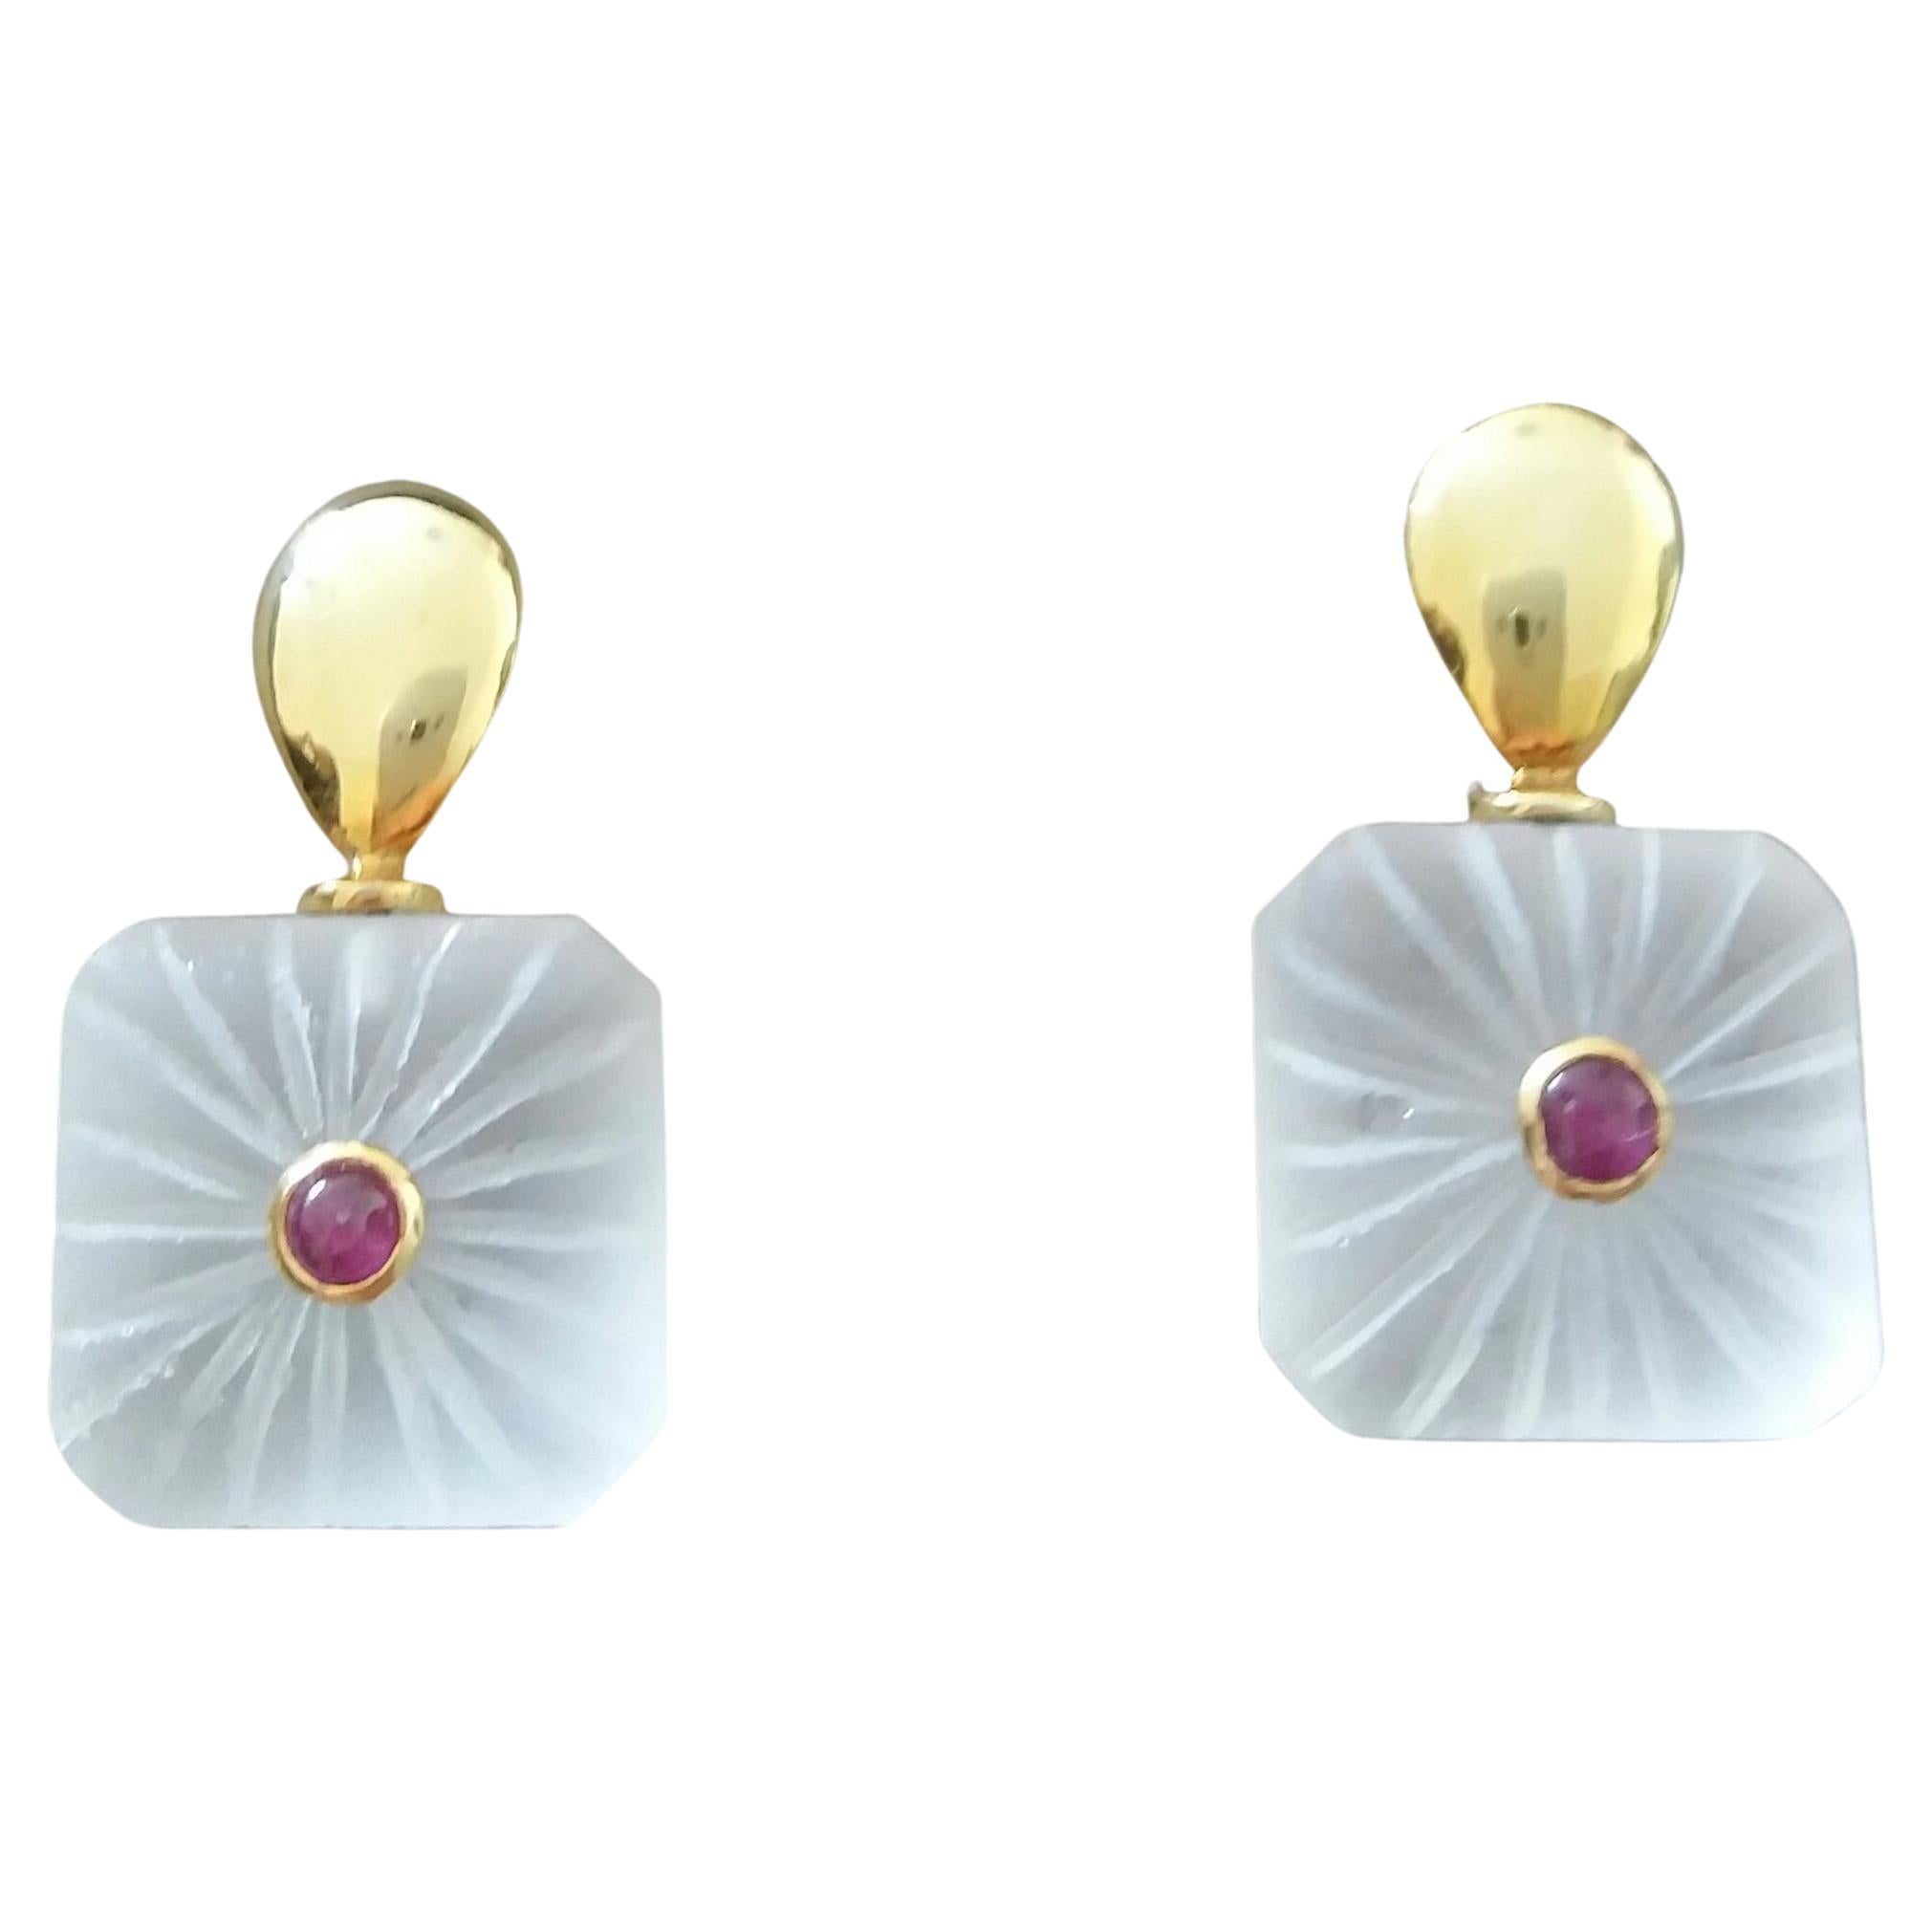 Natural Rock Crystal Quartz Earring Charm Jewelry gemstone earring Sale Fashion Jewelry Gift Beautiful earring Bezel Set stud earring